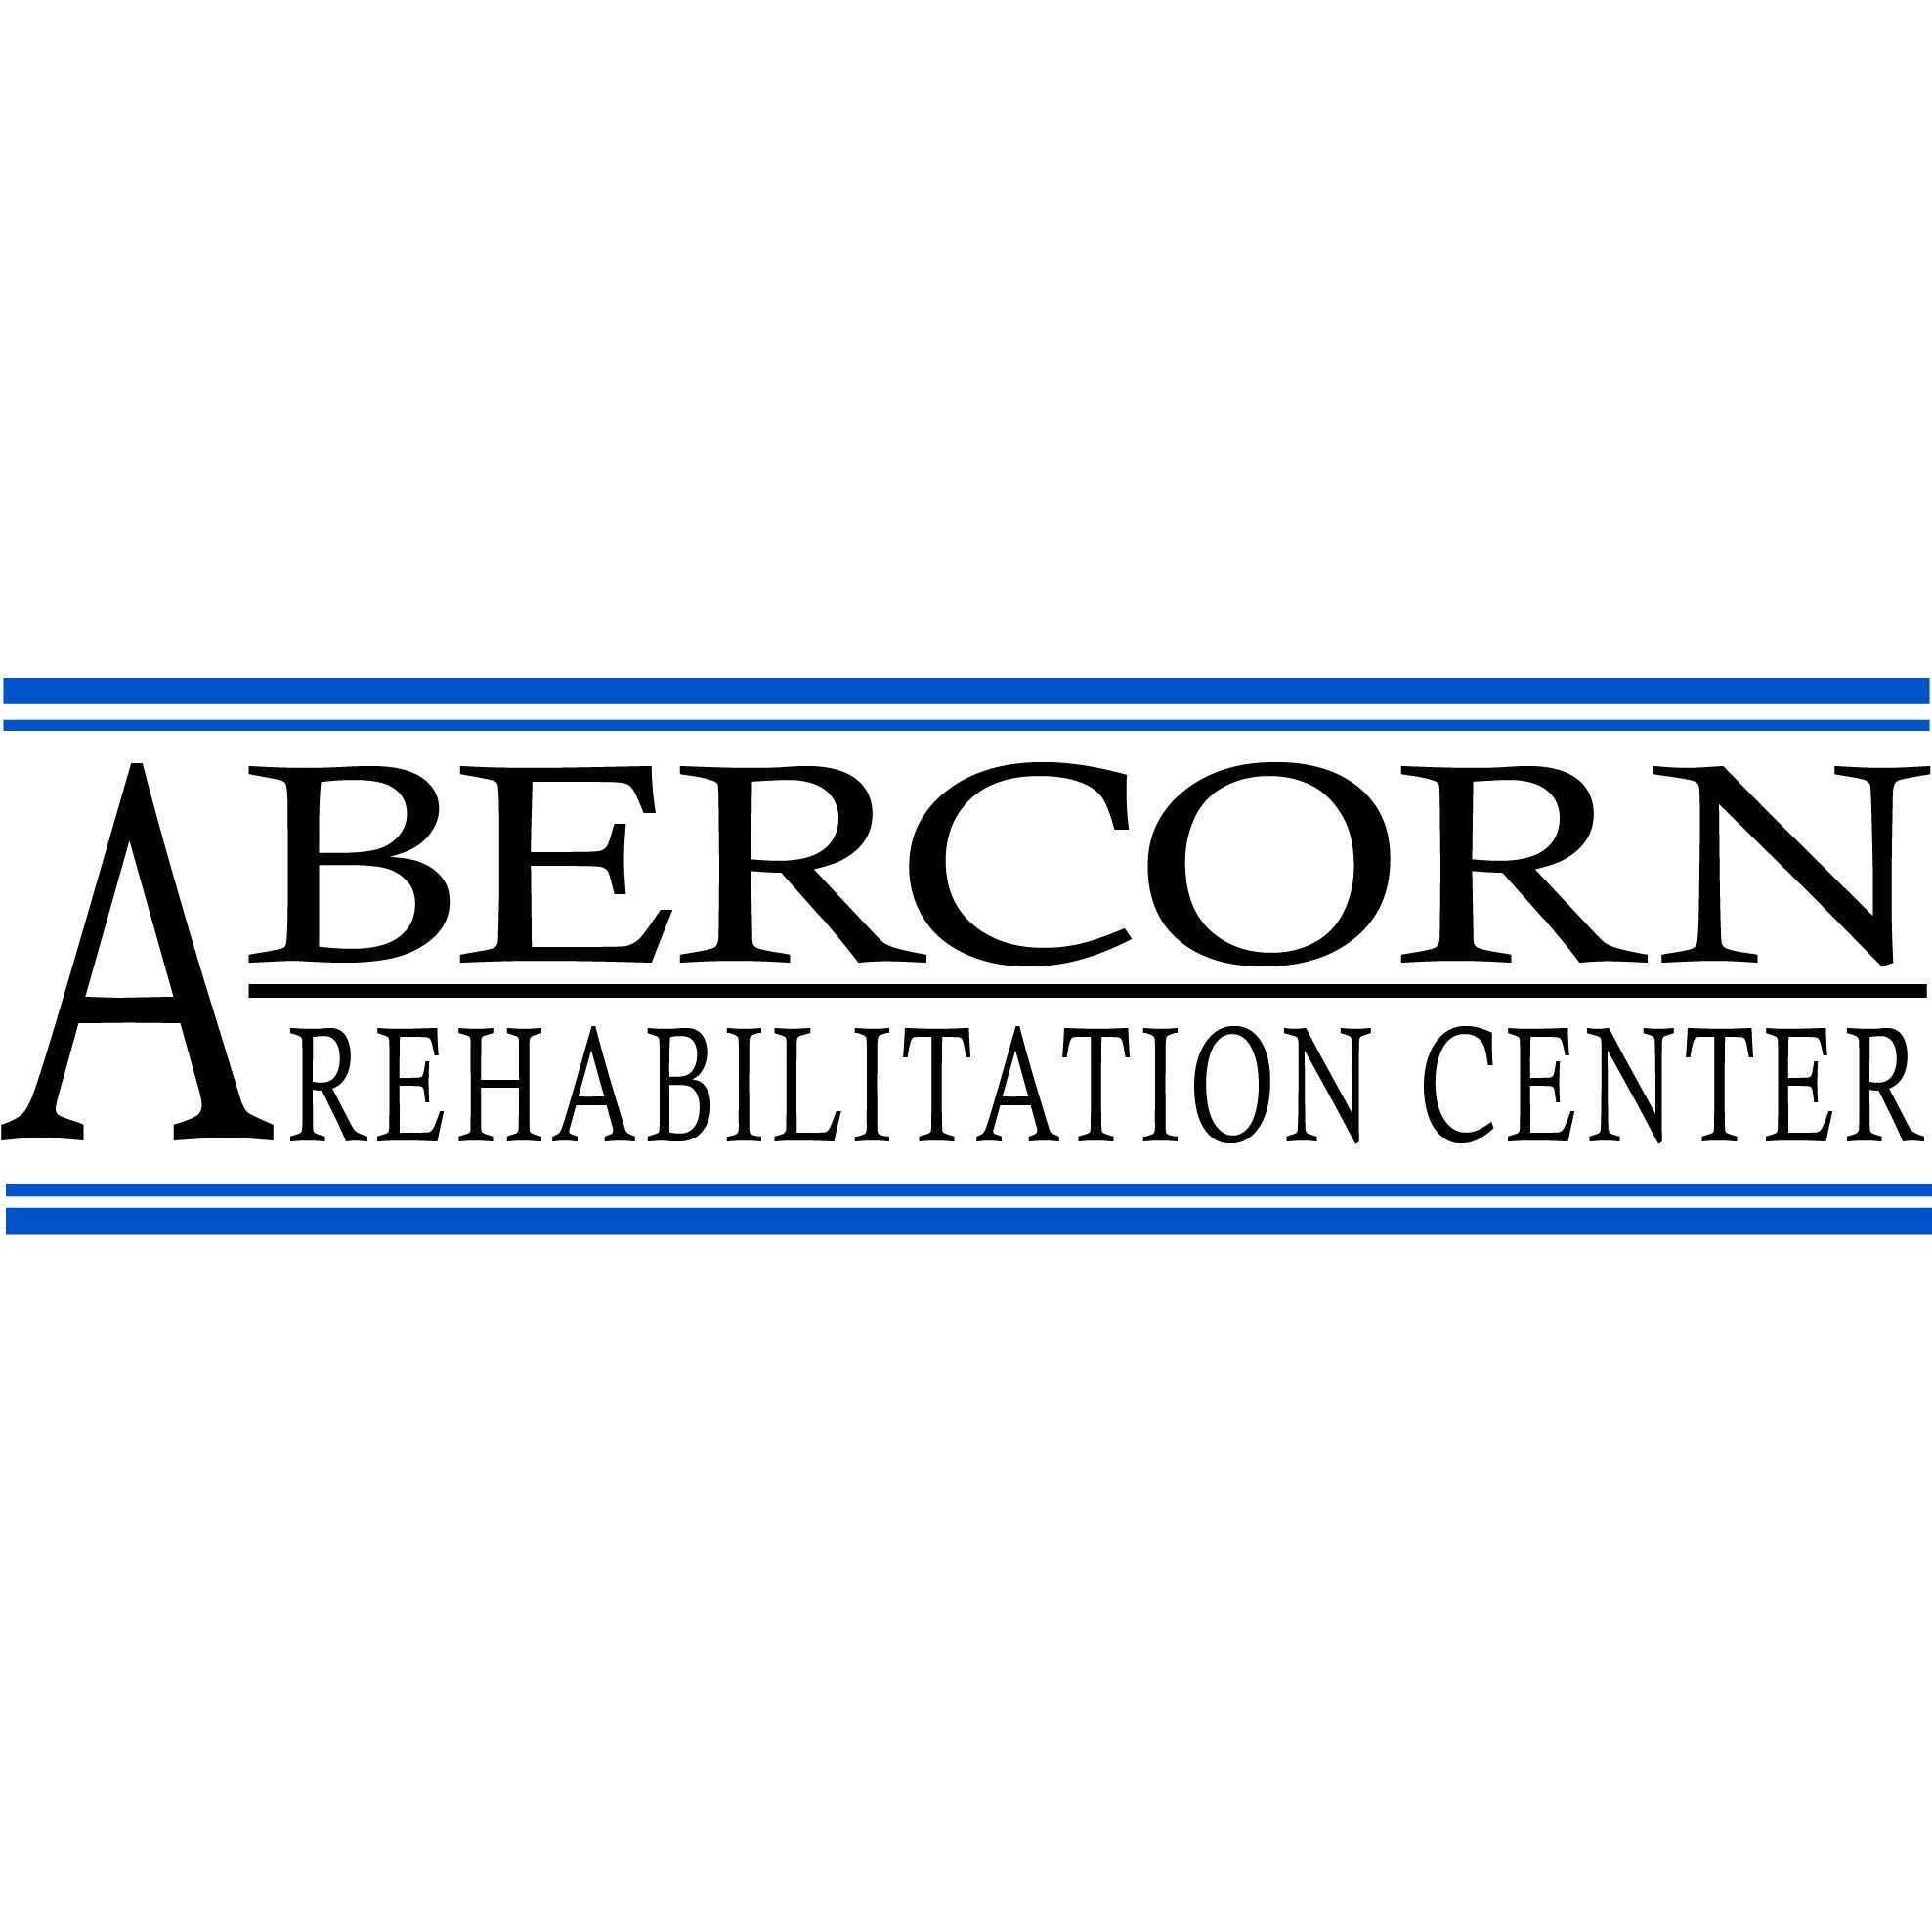 Abercorn Rehabilitation Center - Savannah, GA 31419 - (912)925-4402 | ShowMeLocal.com